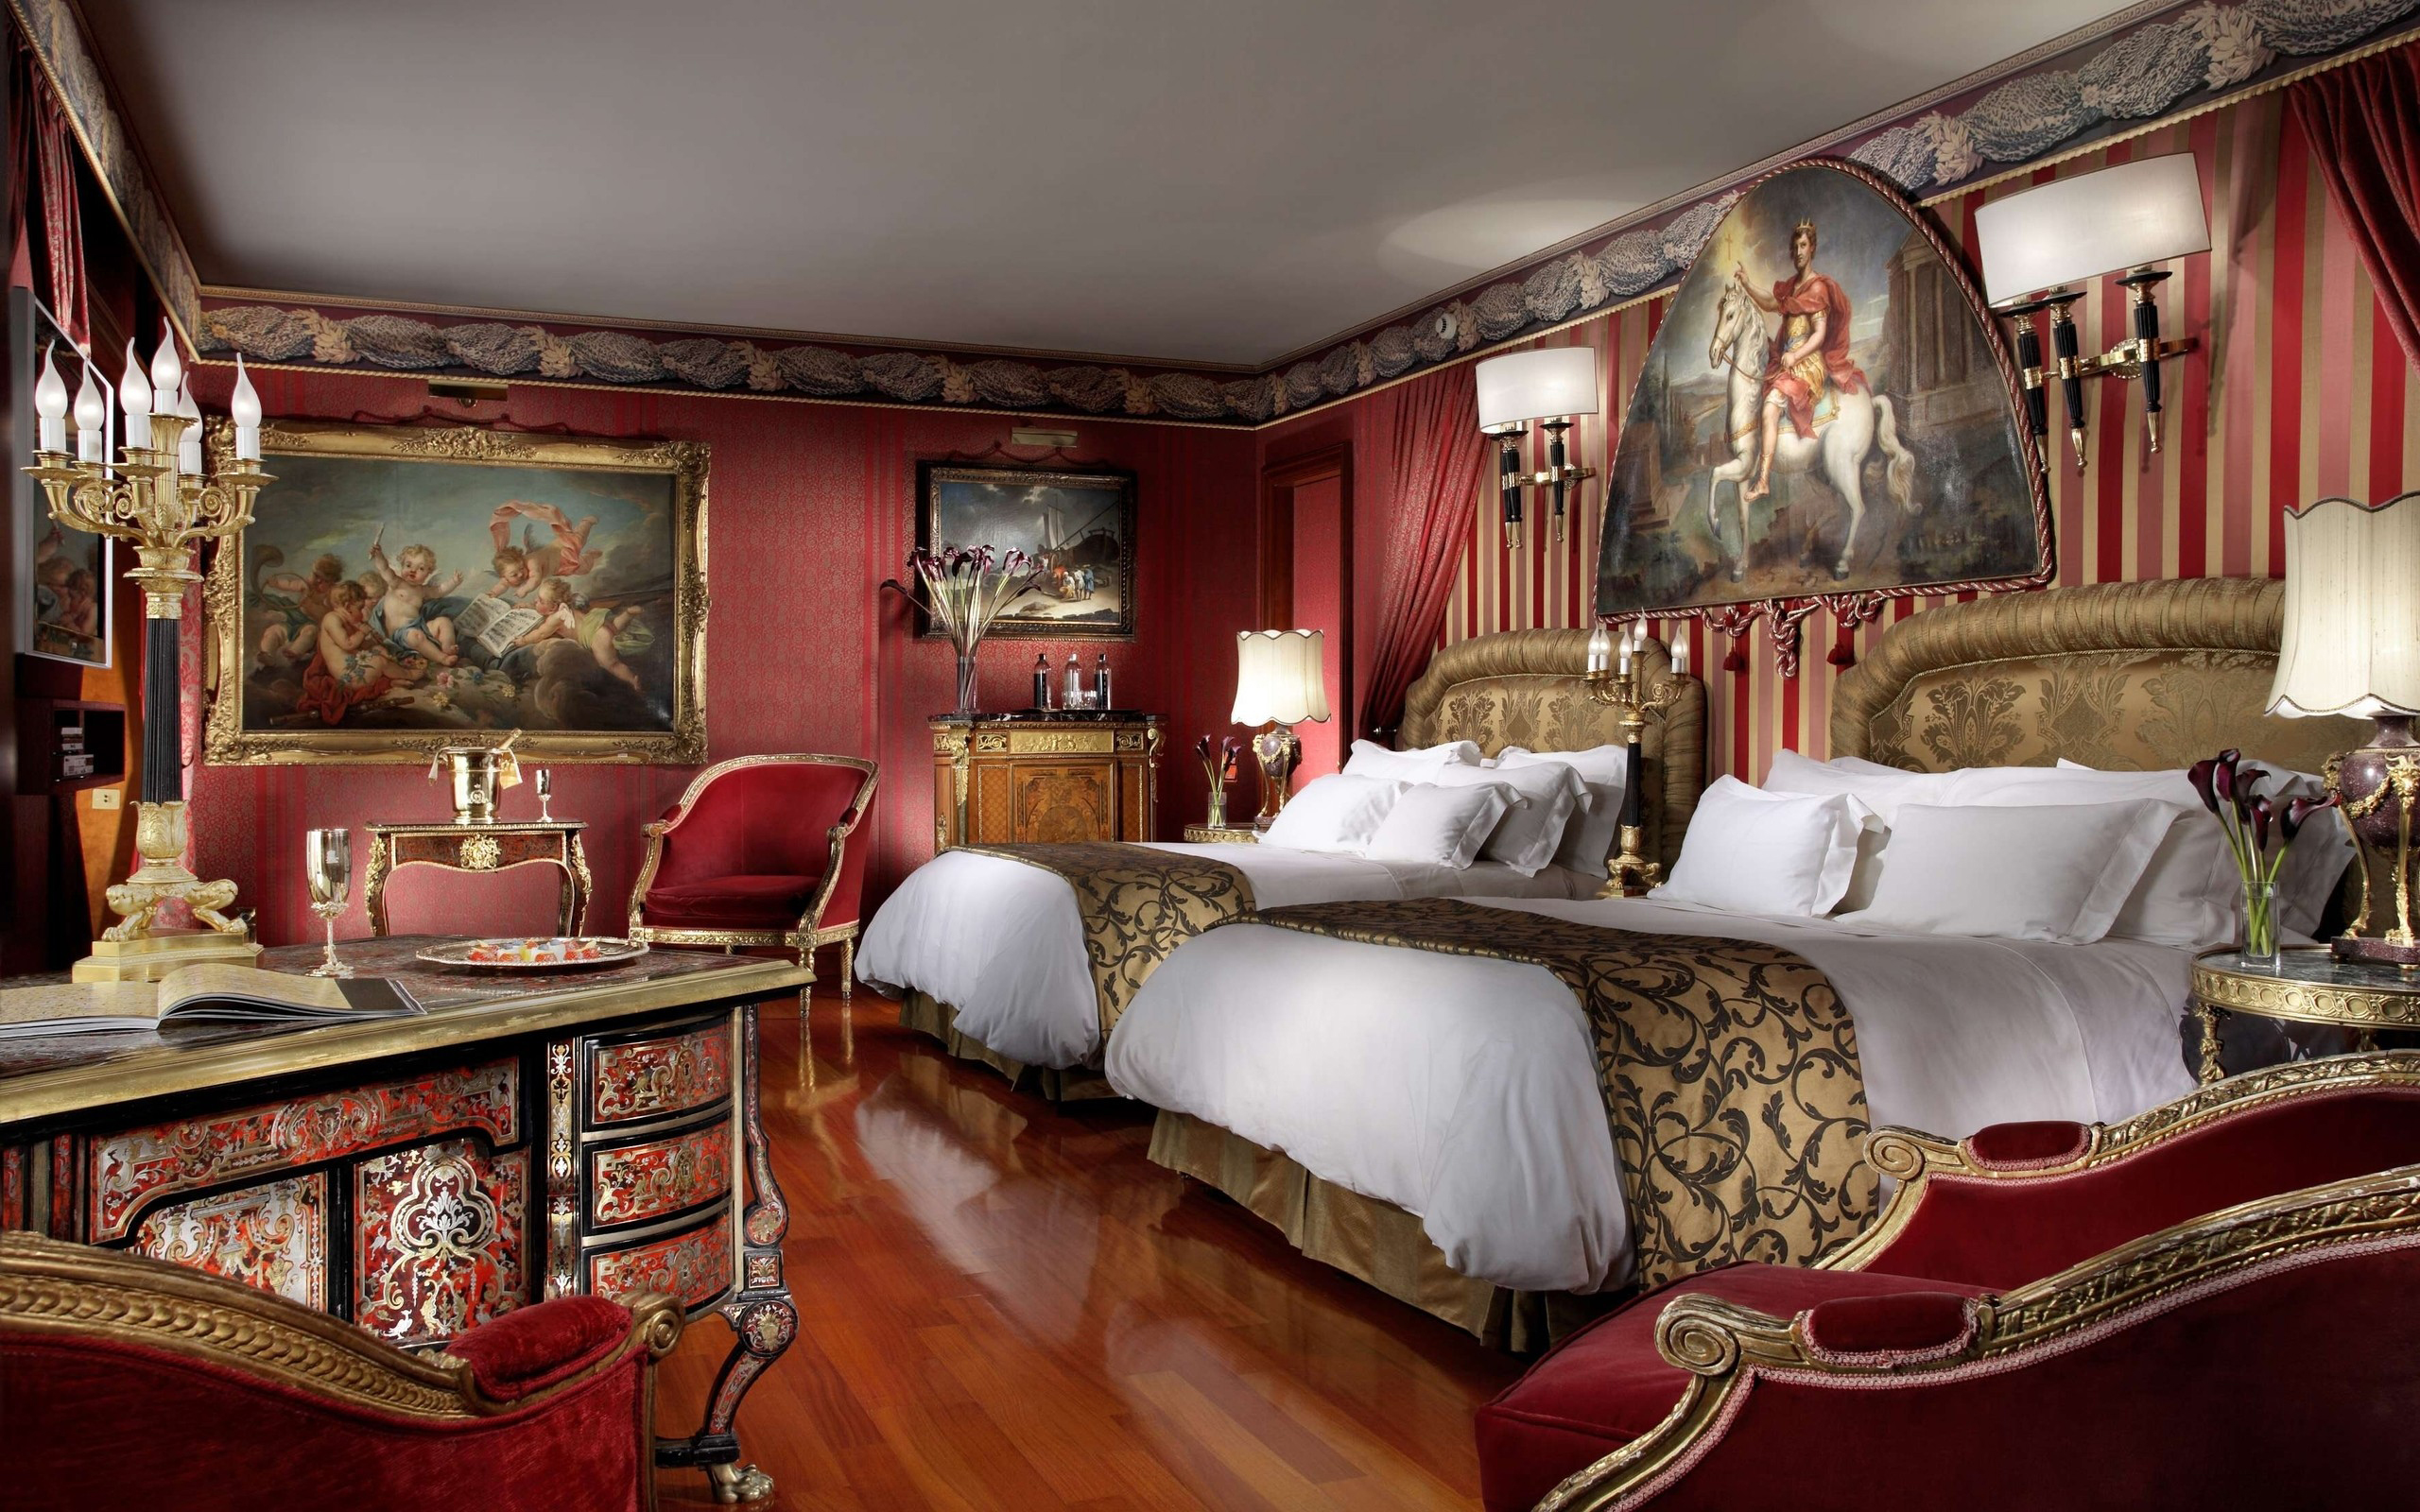 Royal Bedroom Interior Design Architecture - Decobizz.com